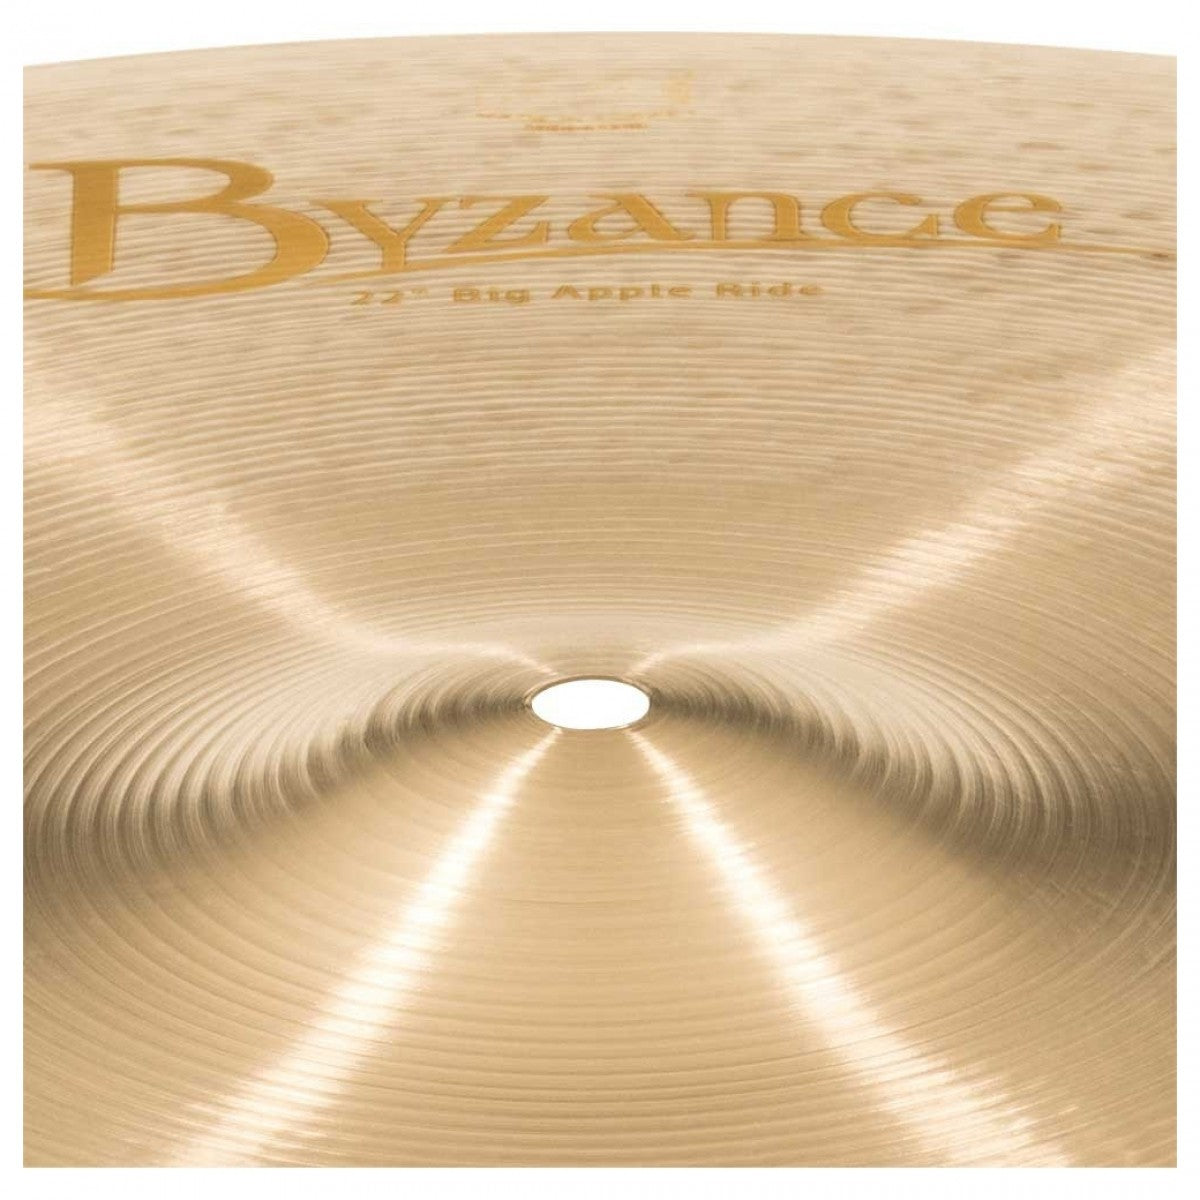 Cymbal Meinl Byzance Jazz 22" Big Apple Ride - B22JBAR - Việt Music